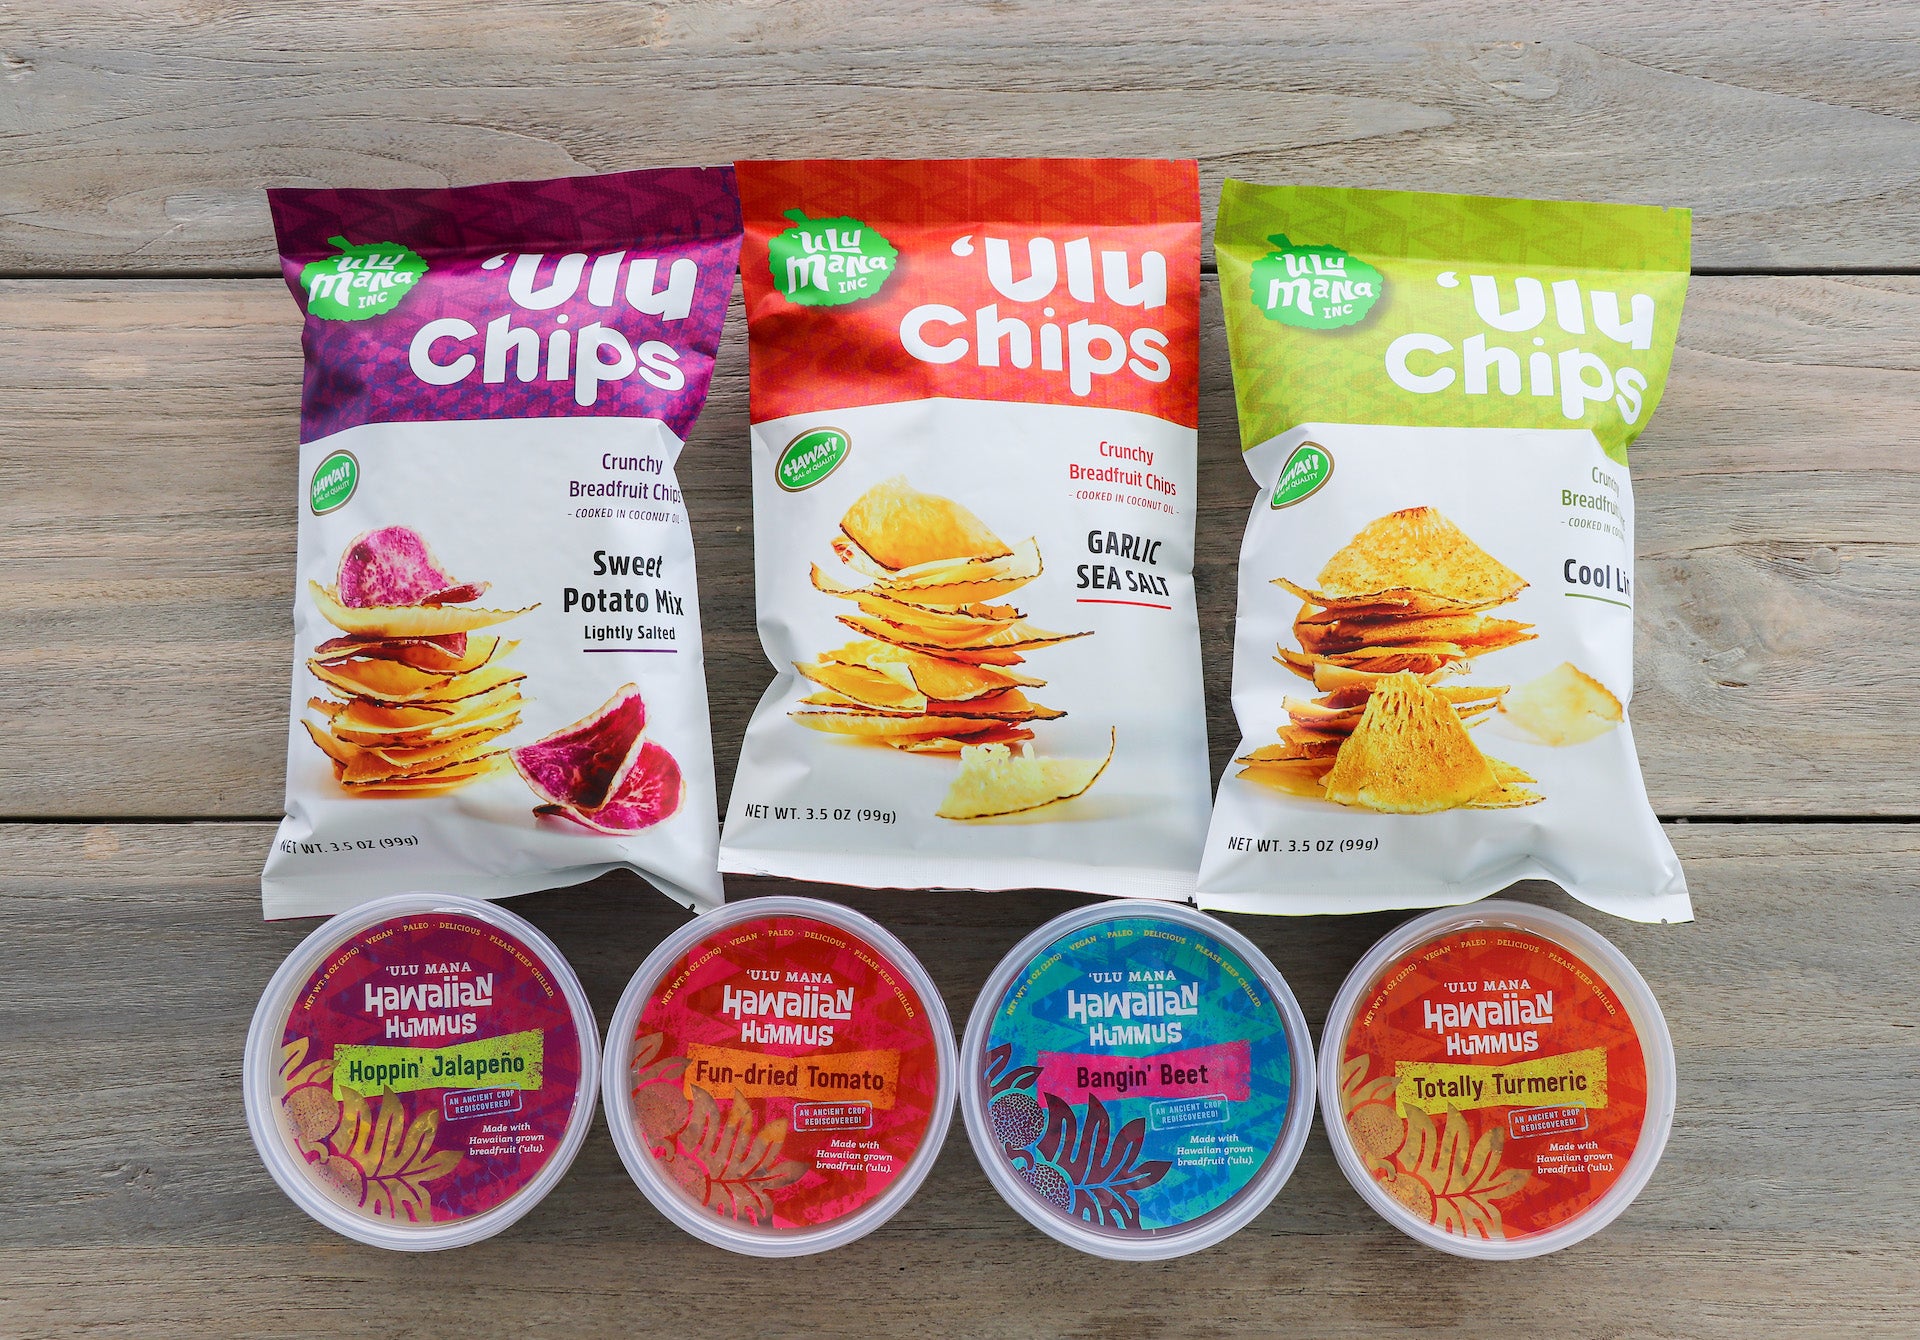 Hawaiian Hummus/'Ulu Chips 8 Pack Combo - Ulu Mana